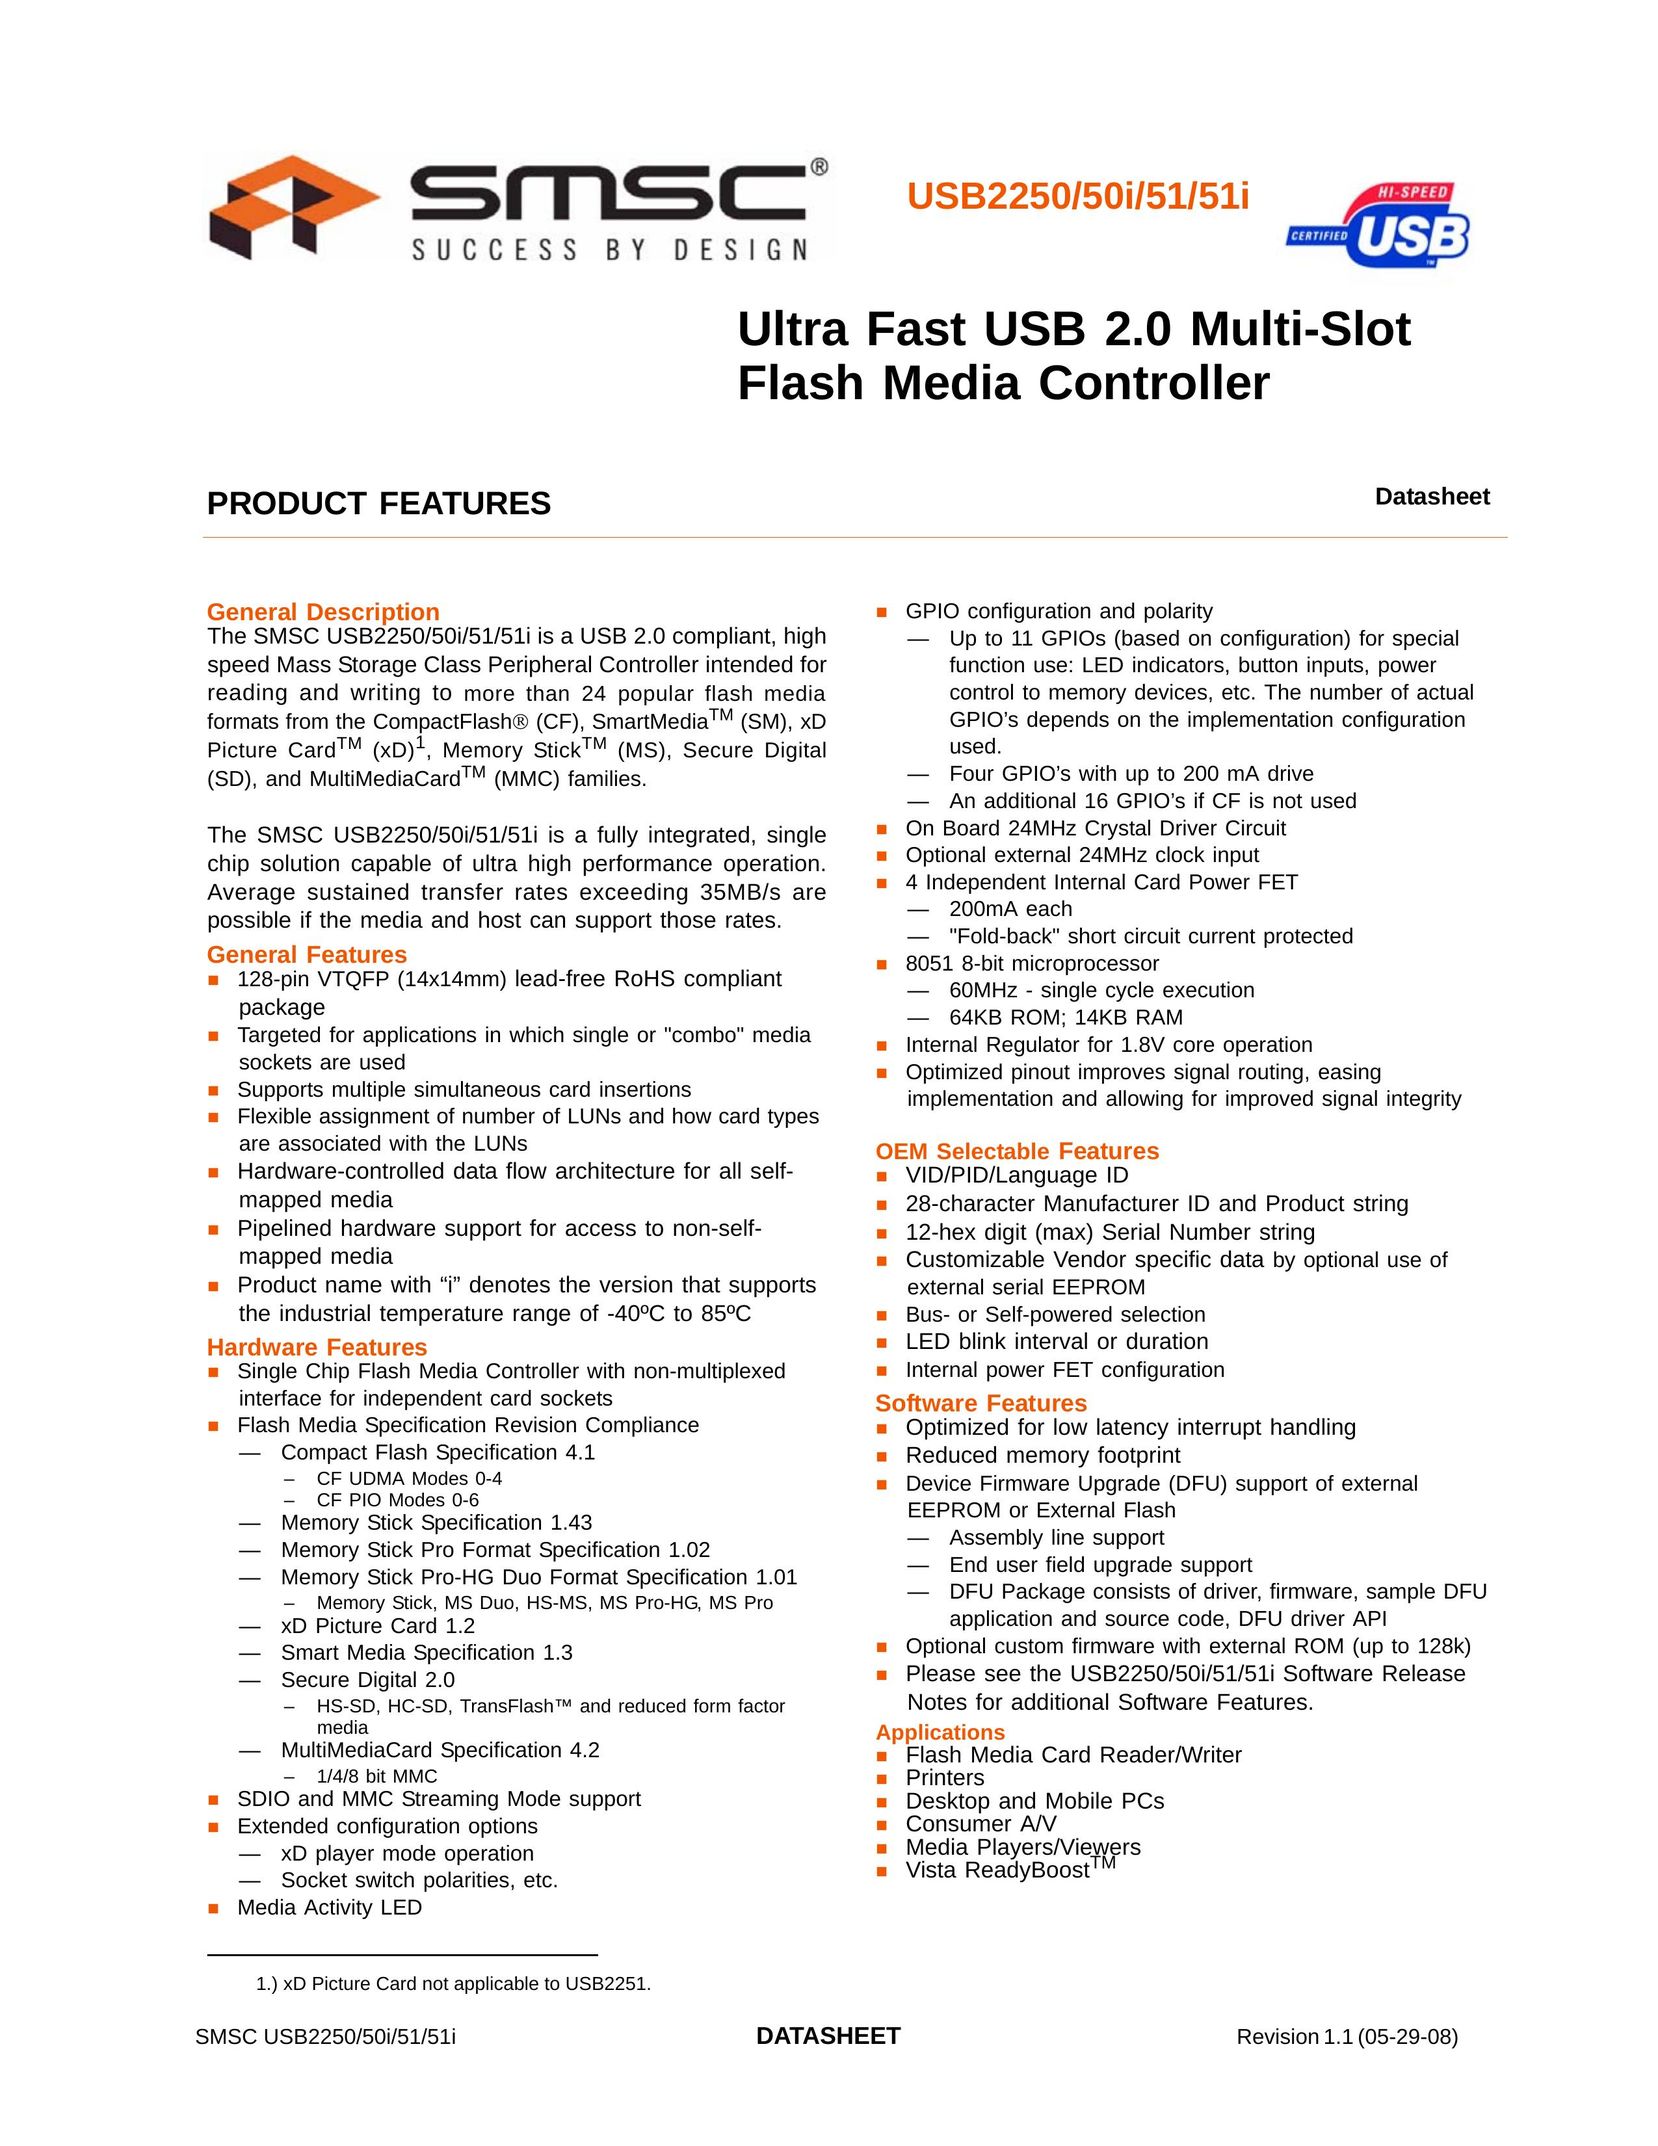 SMSC USB2251 Computer Drive User Manual